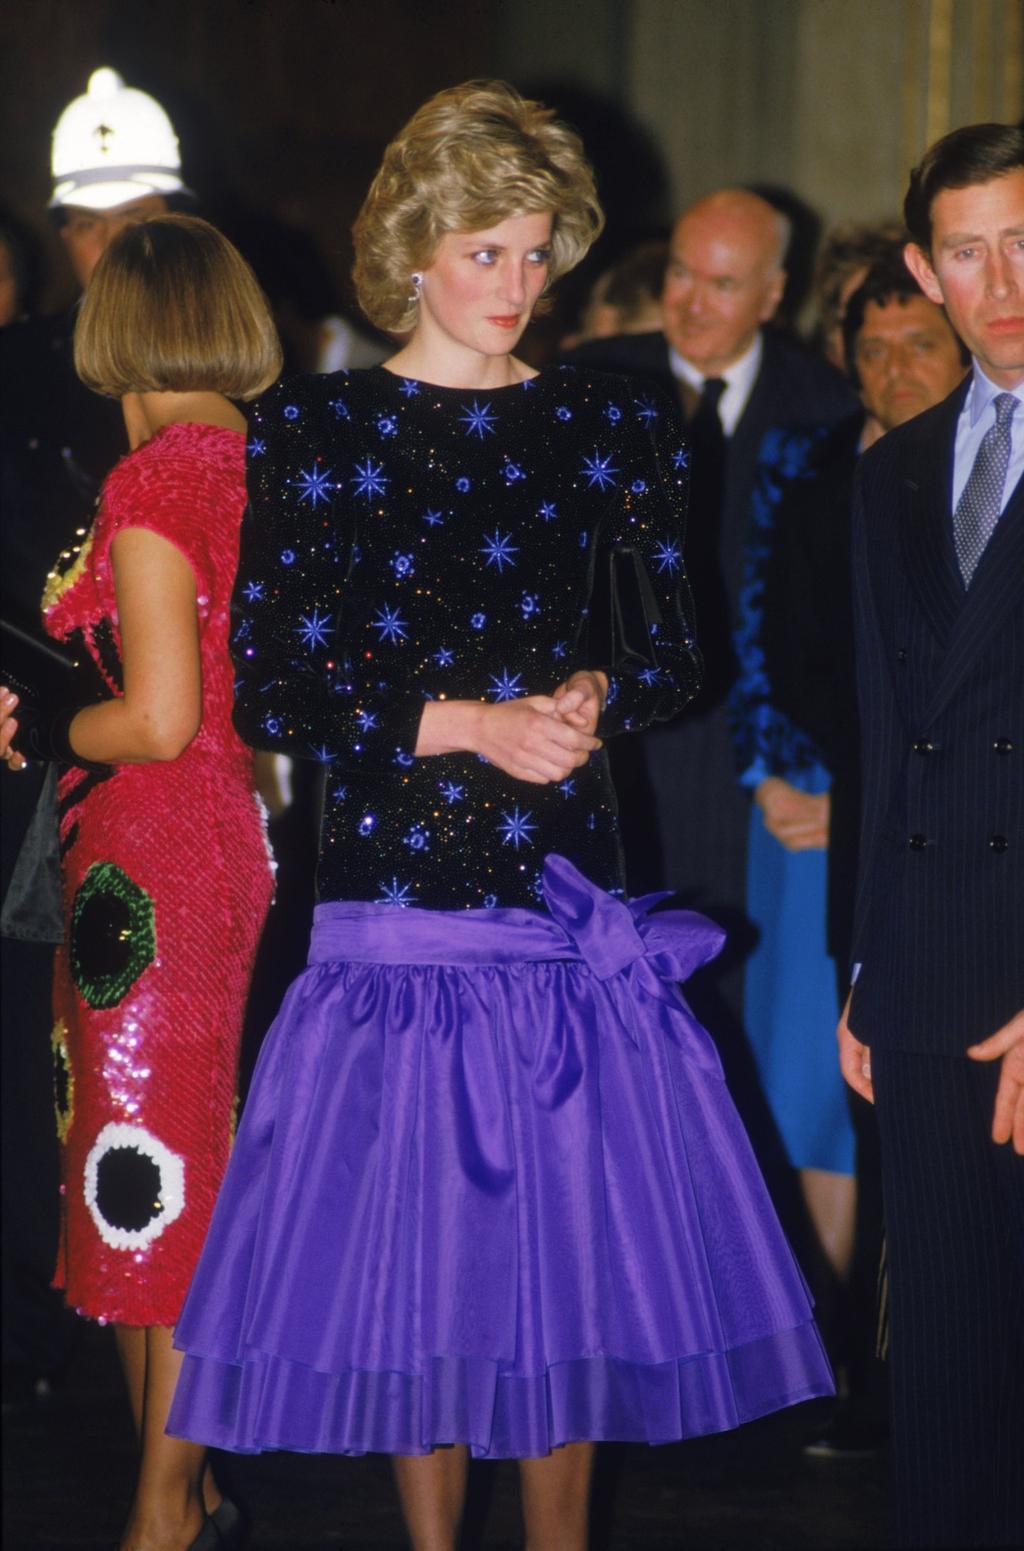 1985: Princess Diana is a